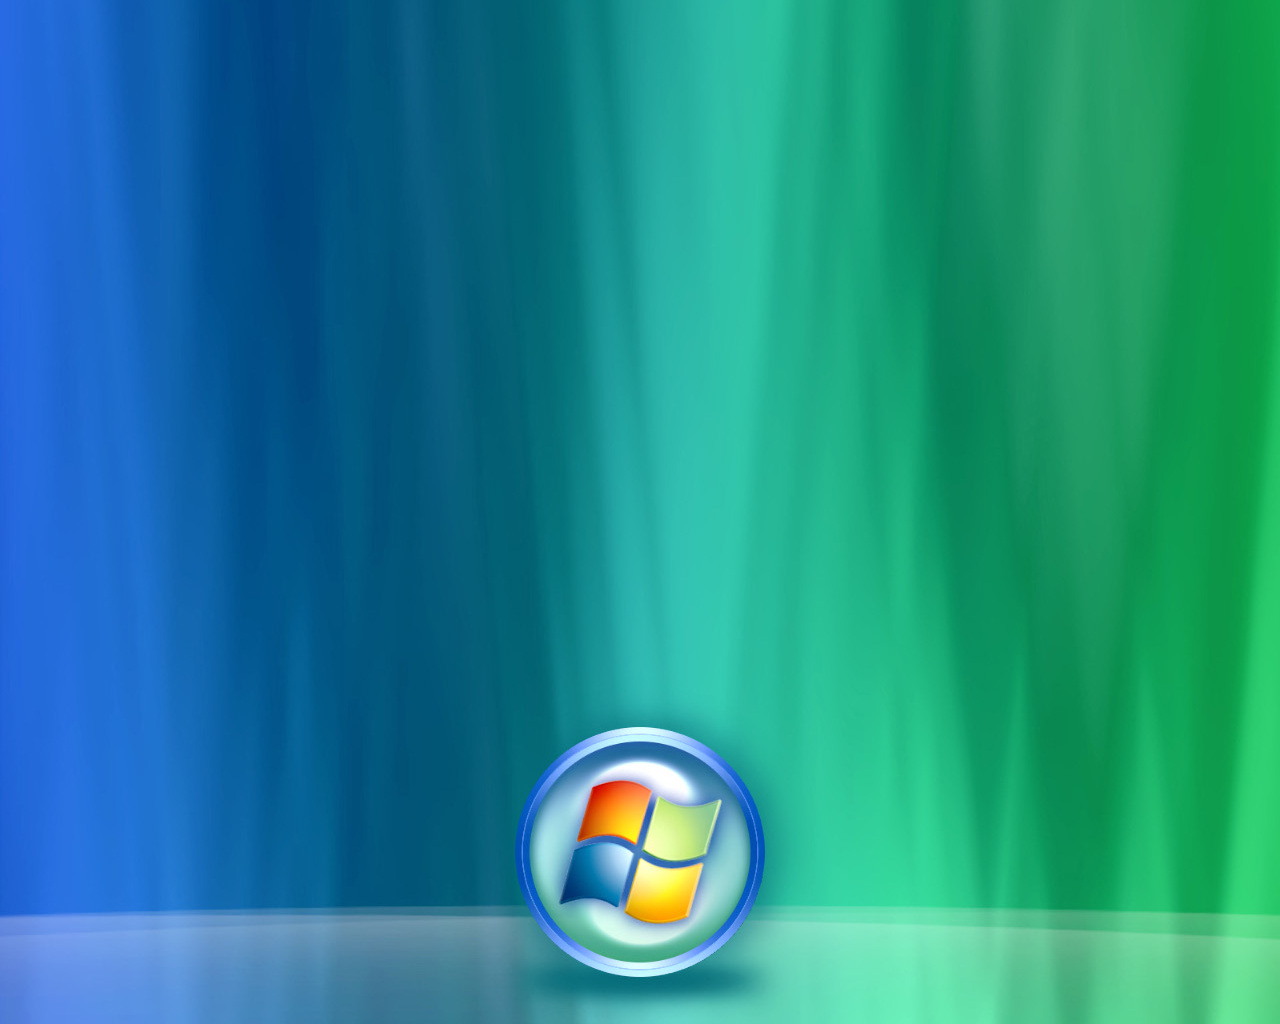 Windows Vista Aurora Blue Green Neon Wallpaper Geekpedia 1280x1024